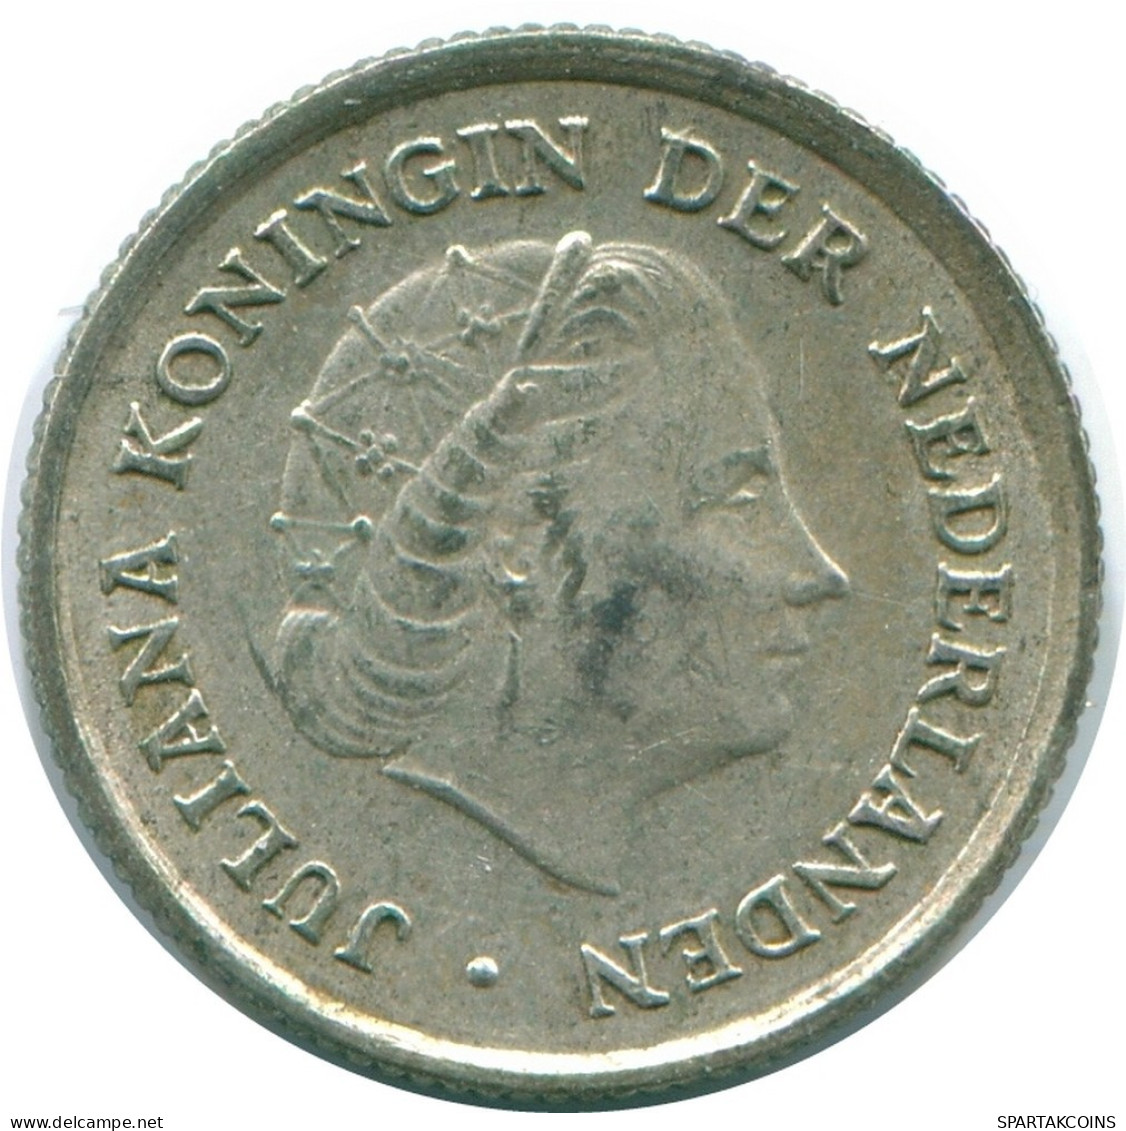 1/10 GULDEN 1963 NIEDERLÄNDISCHE ANTILLEN SILBER Koloniale Münze #NL12472.3.D.A - Netherlands Antilles